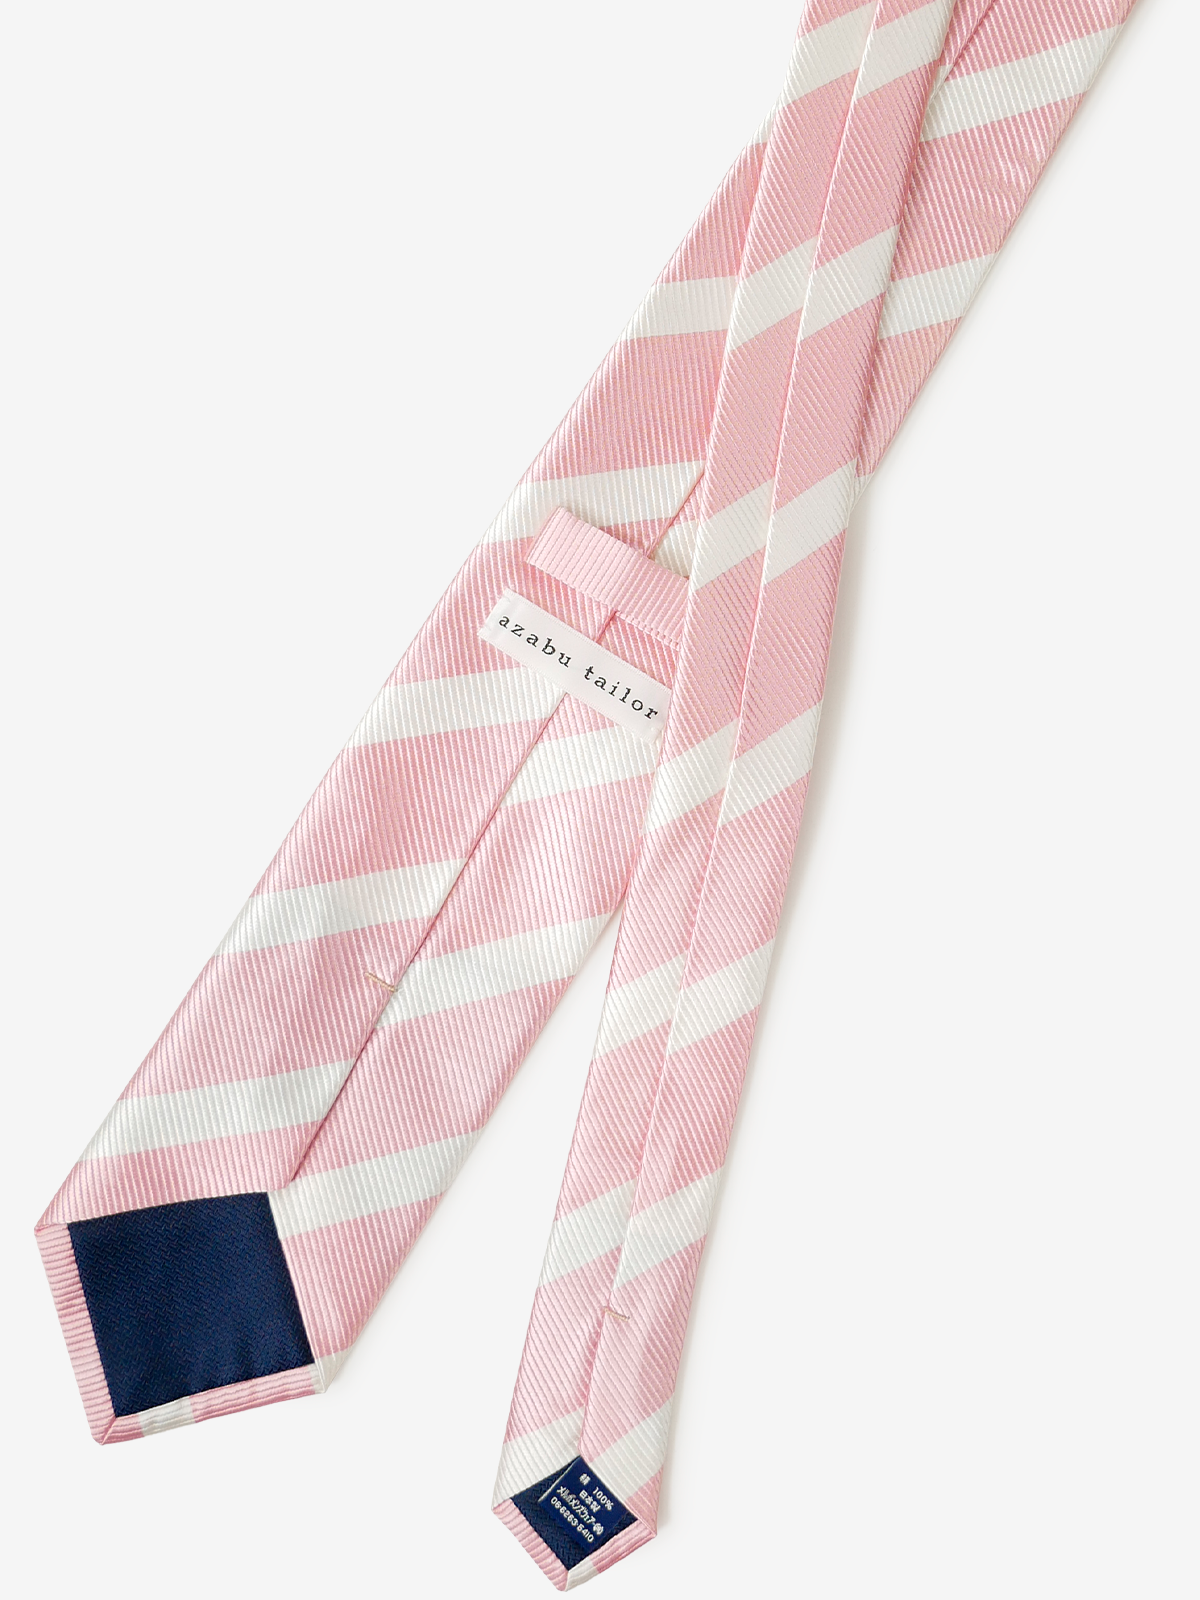 Repp Stripe Tie｜ピンク